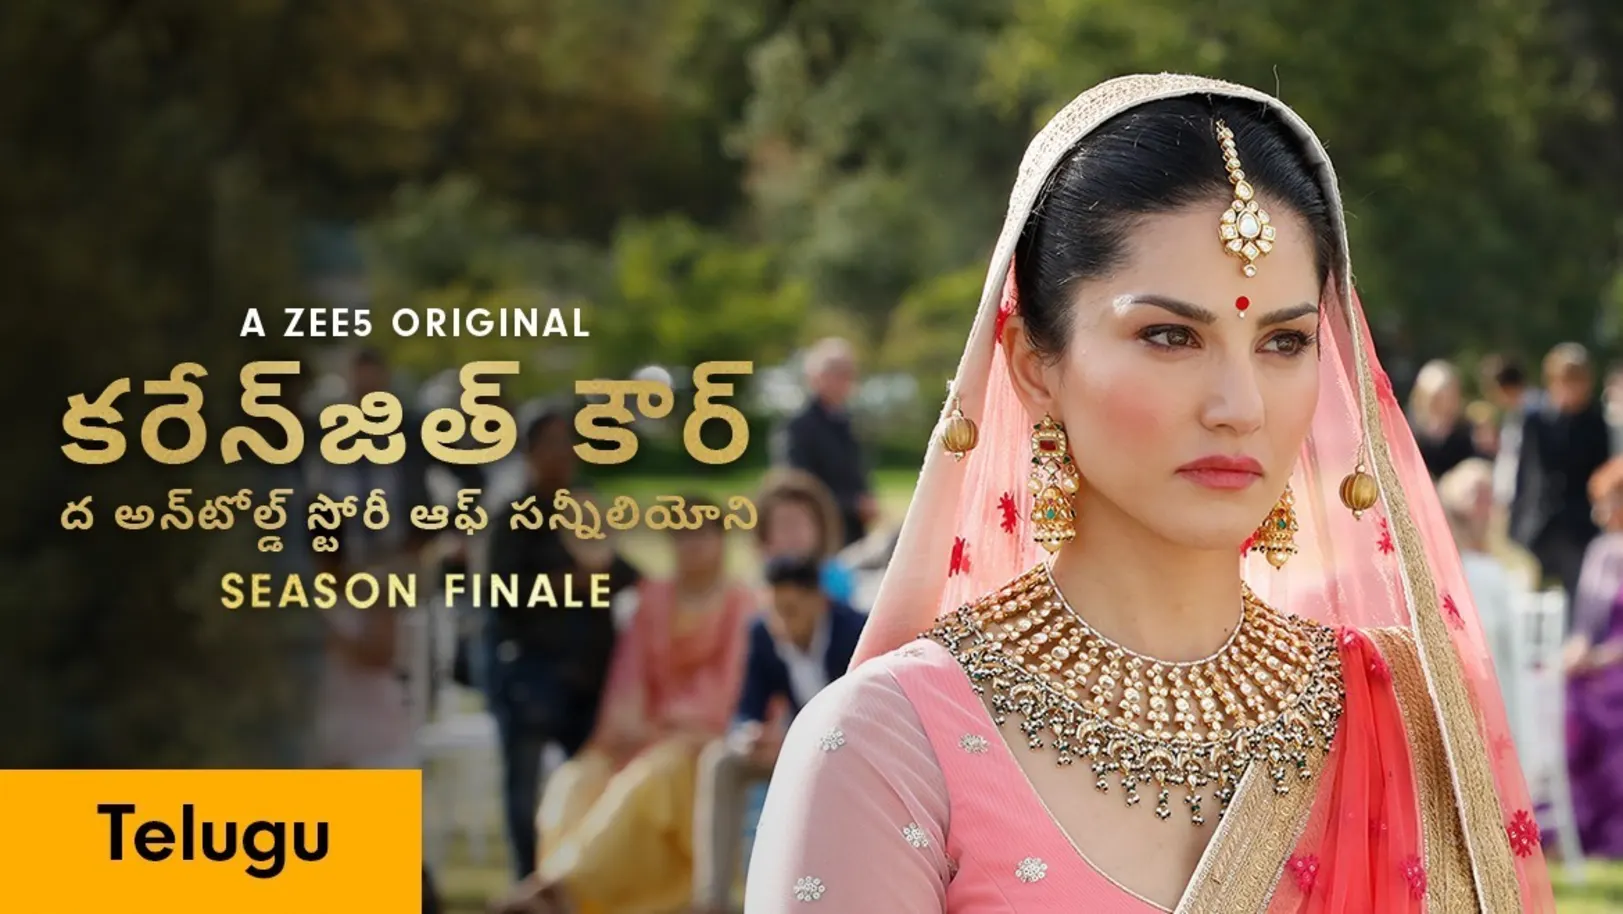 Karenjit Kaur - The Untold Story of Sunny Leone - Season Finale Trailer